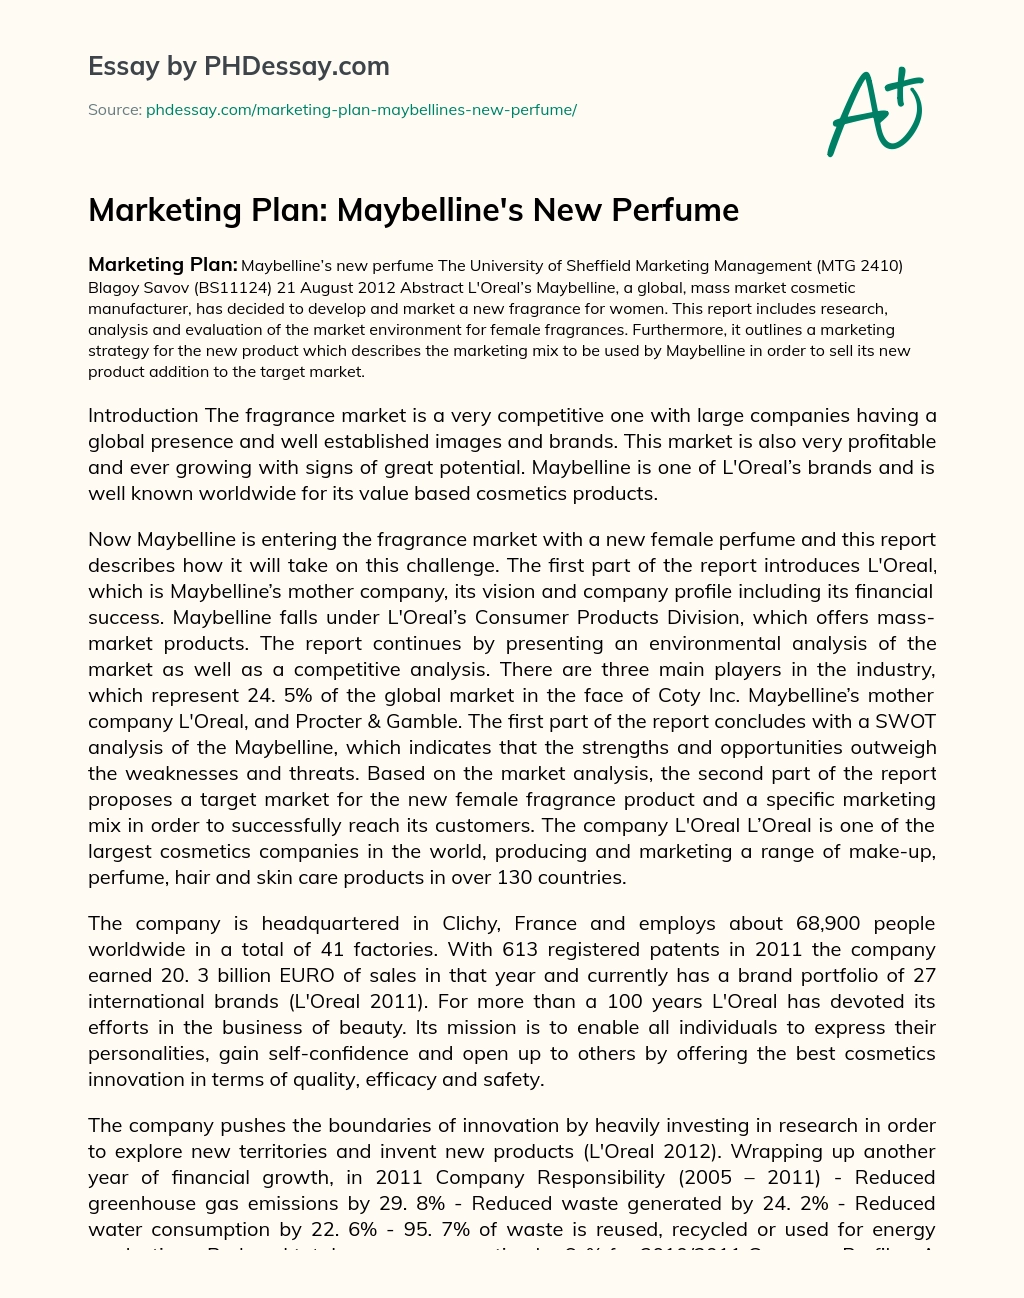 Marketing Plan: Maybelline’s New Perfume essay